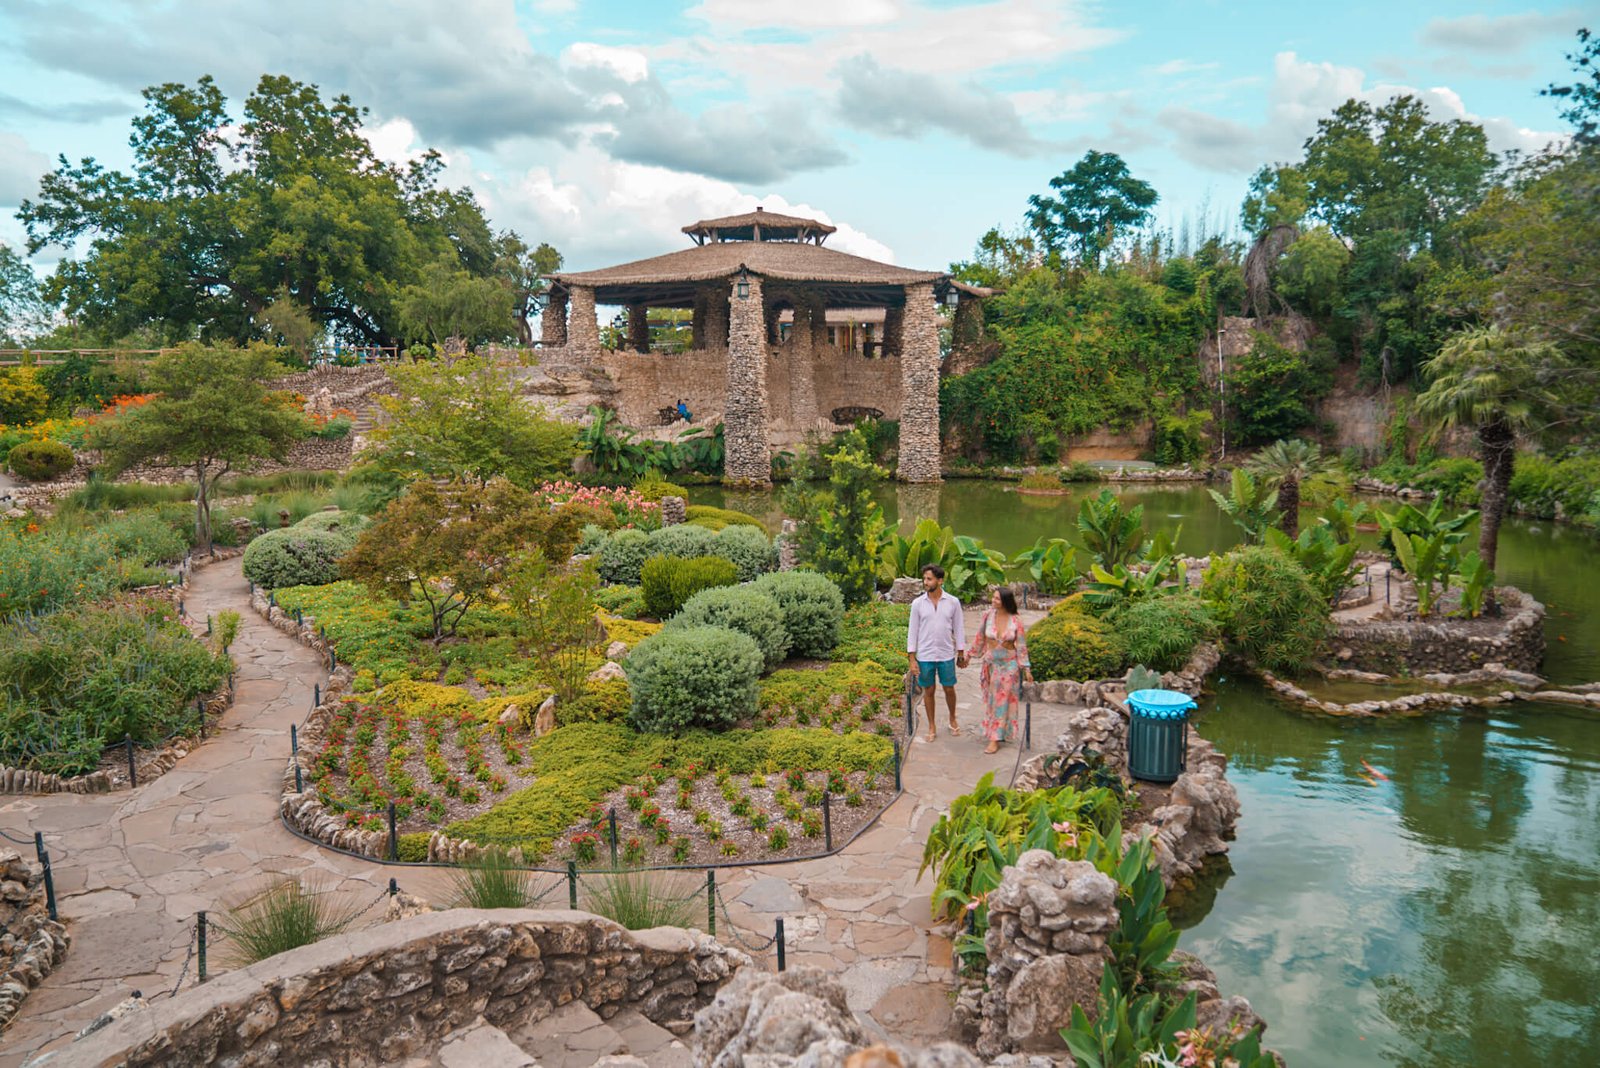 Japanese Tea Gardens, things to do in San Antonio, Texas